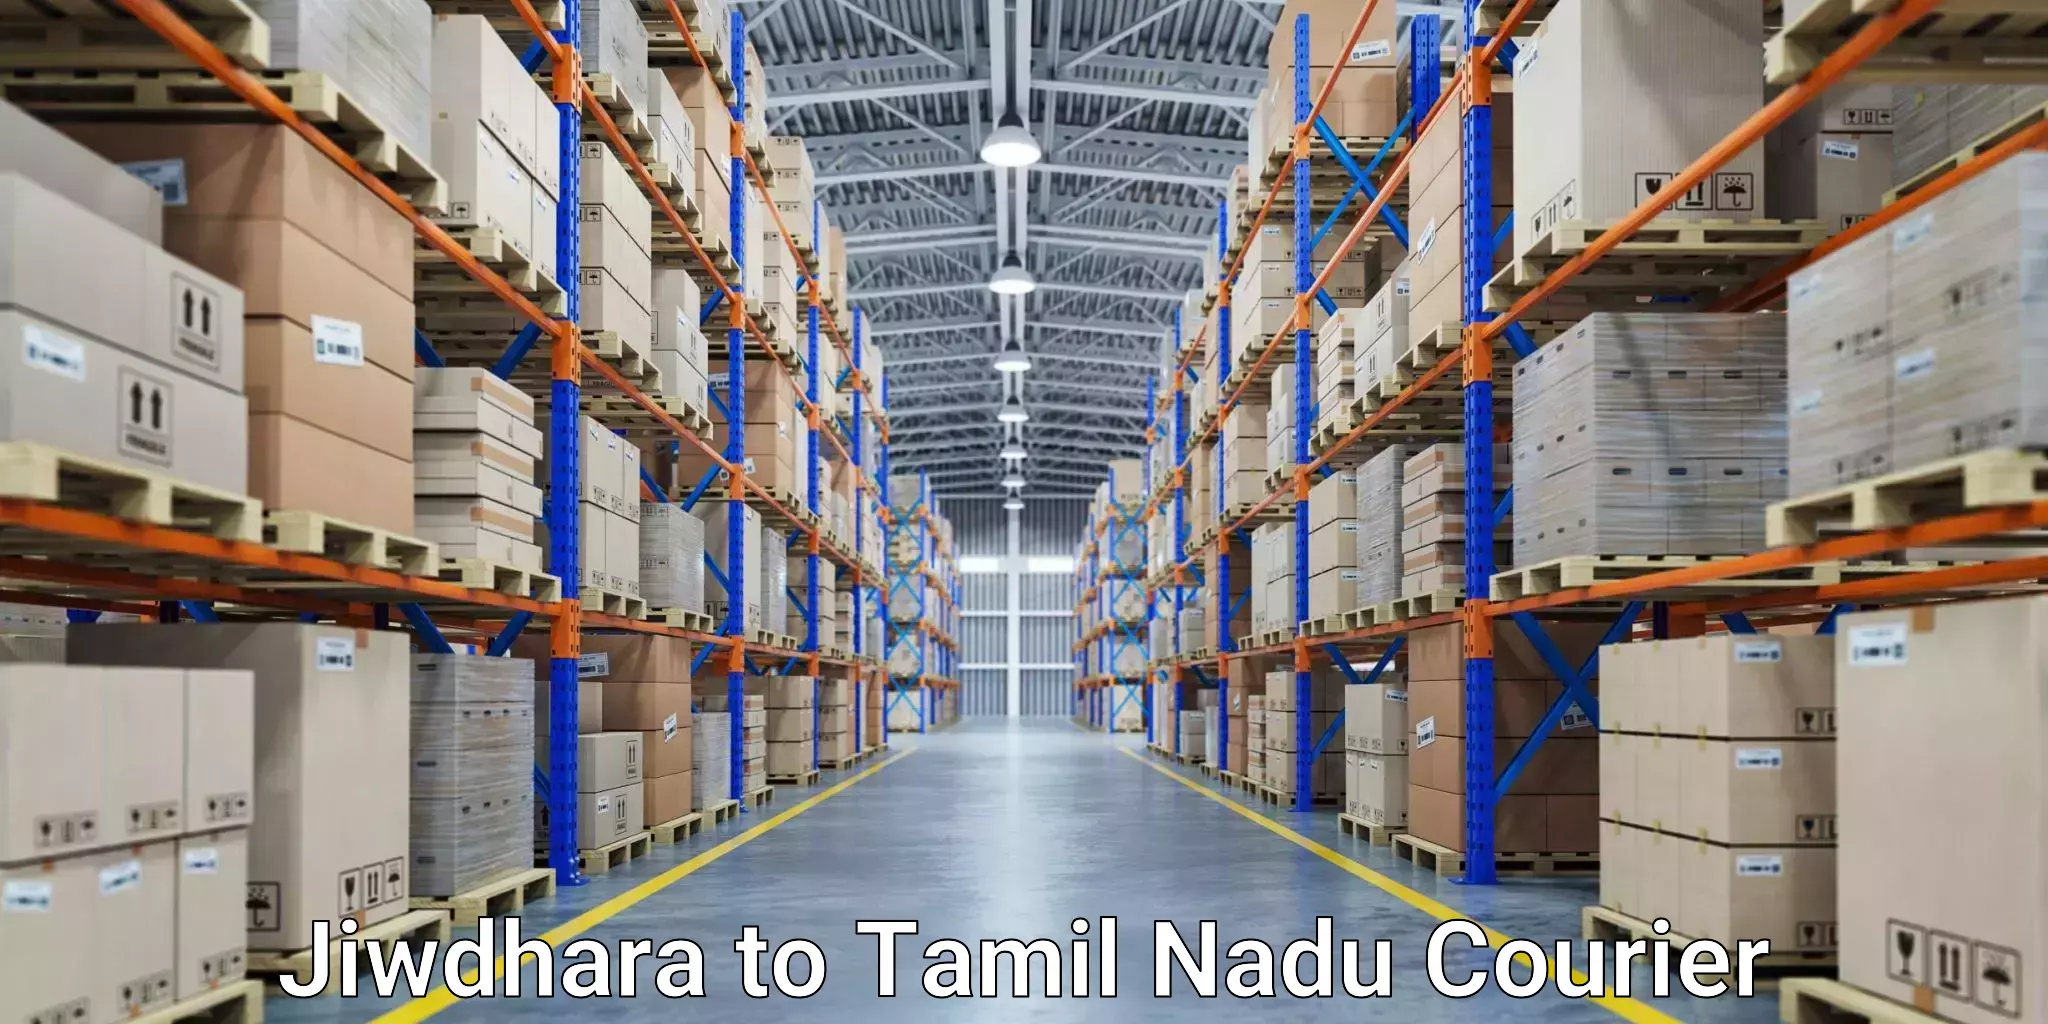 Express mail solutions Jiwdhara to Tamil Nadu